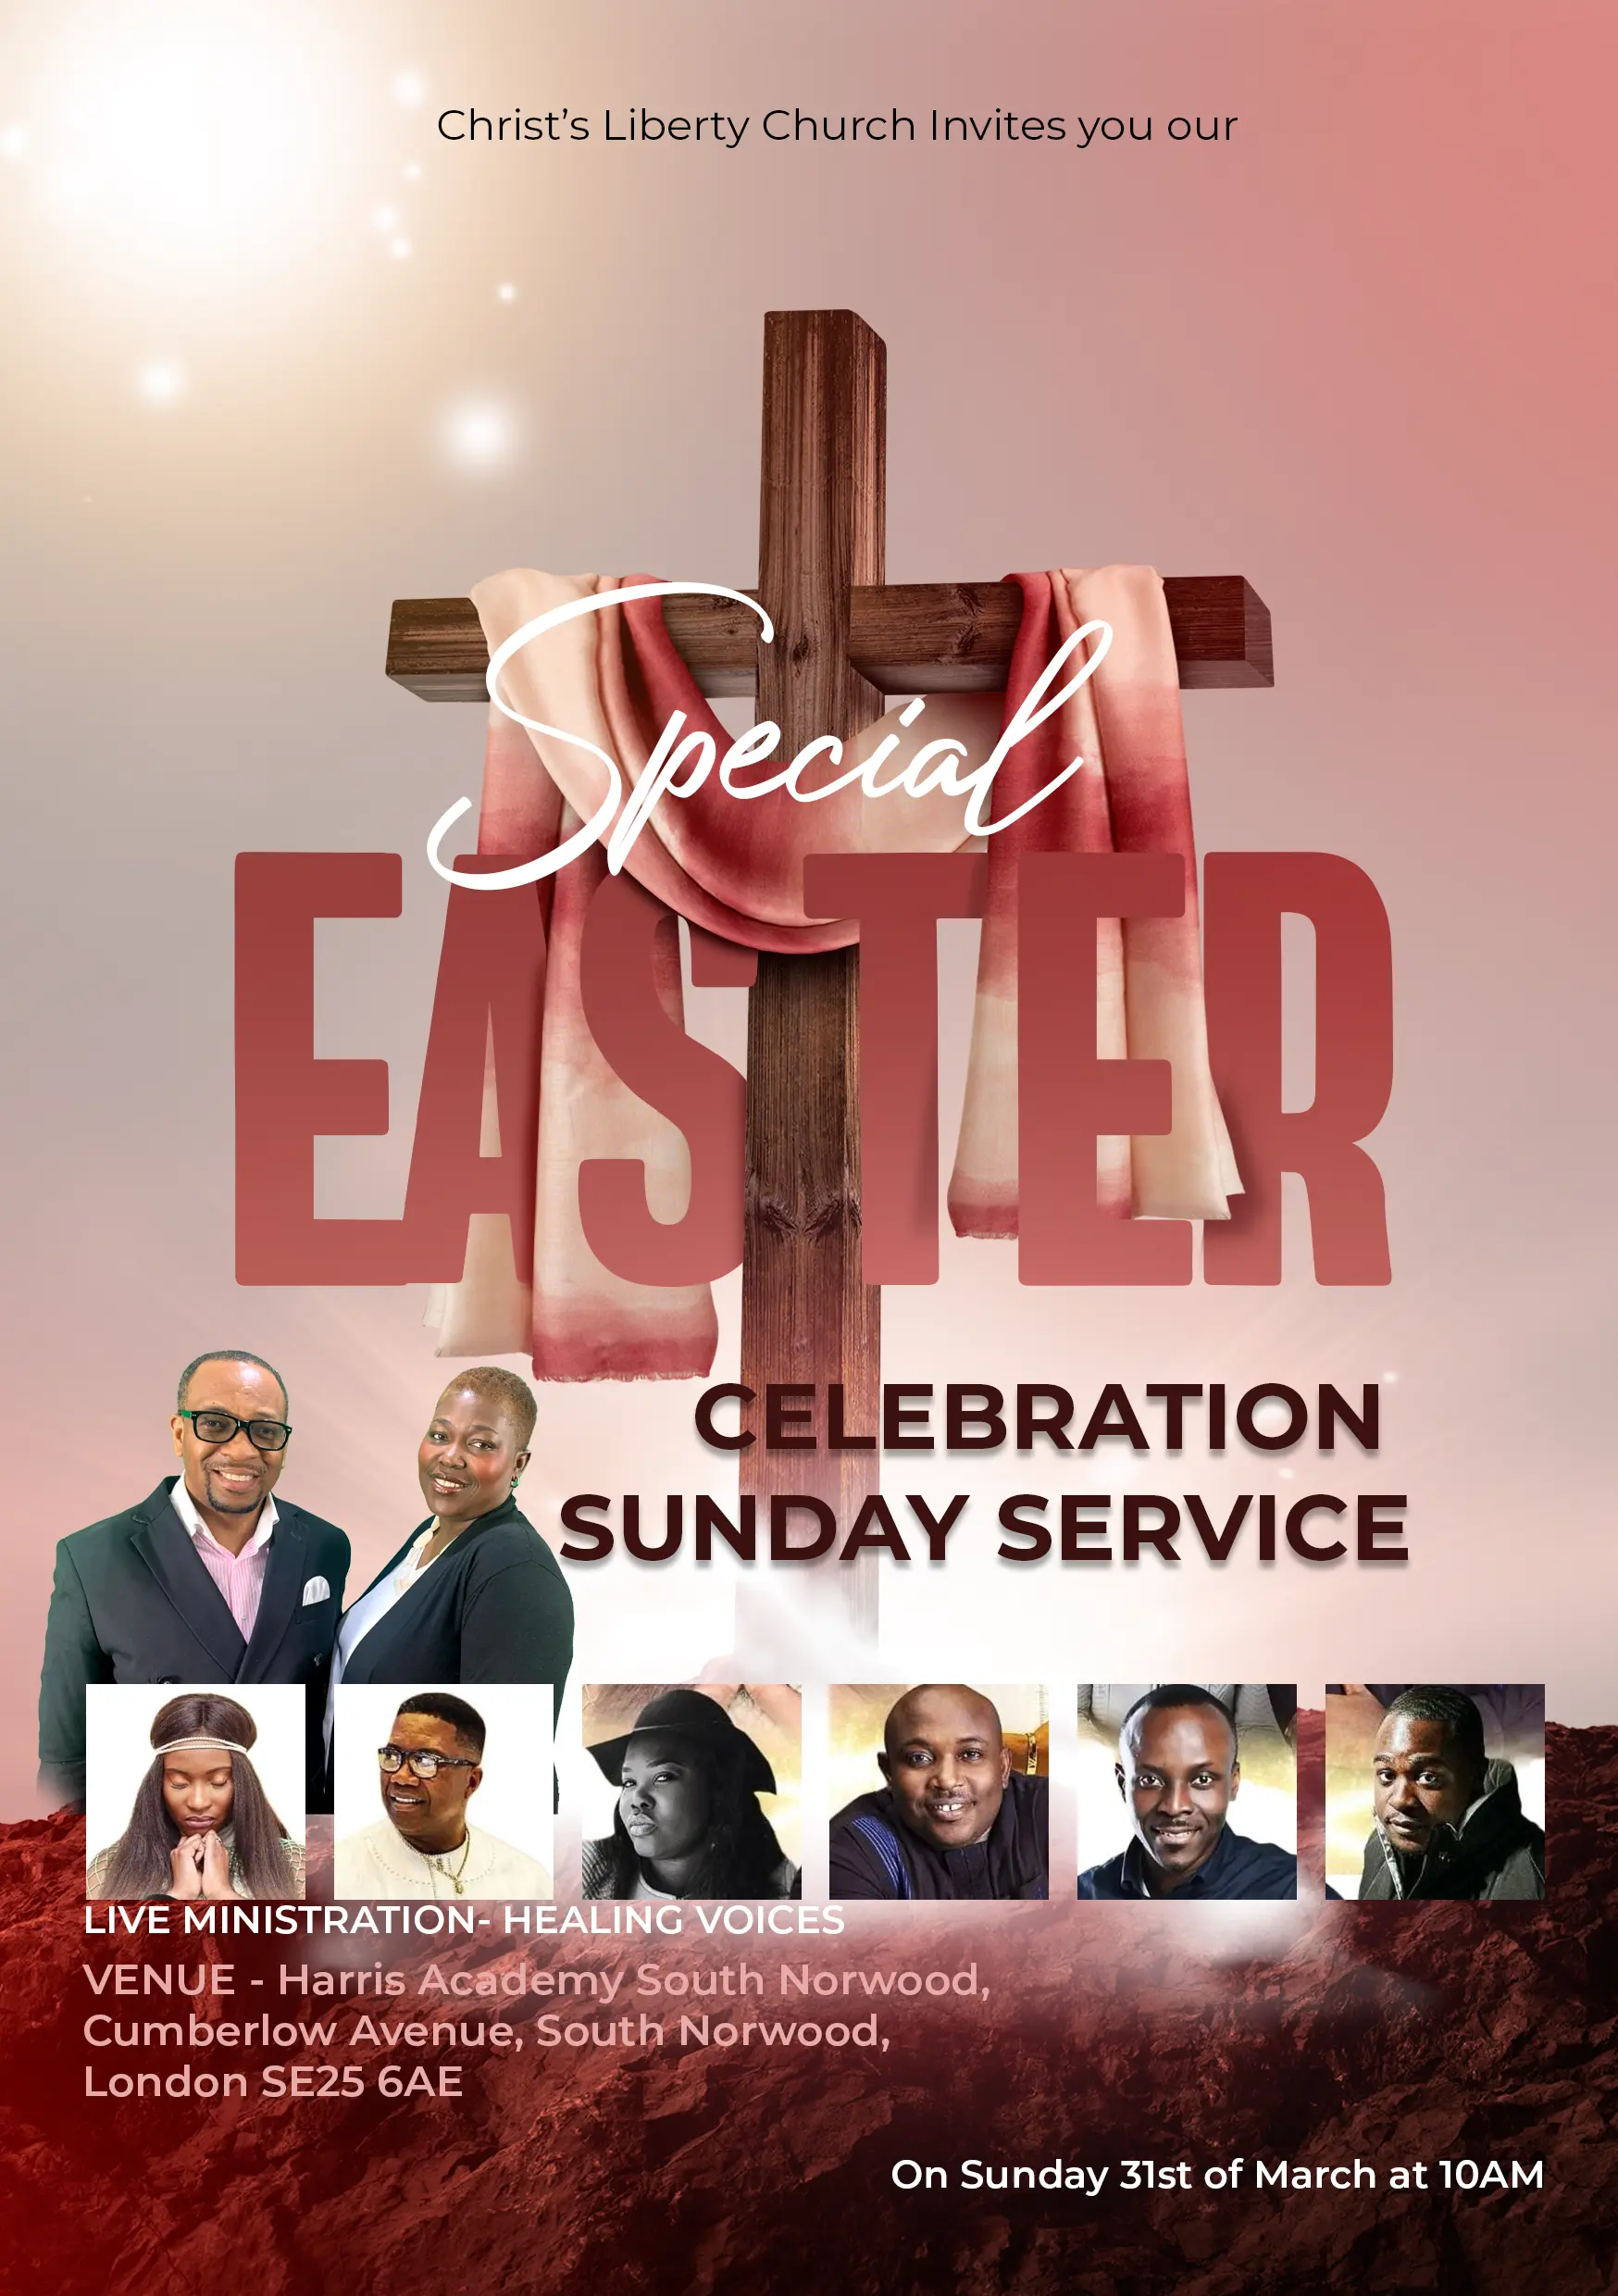 Easter Sunday Flyer